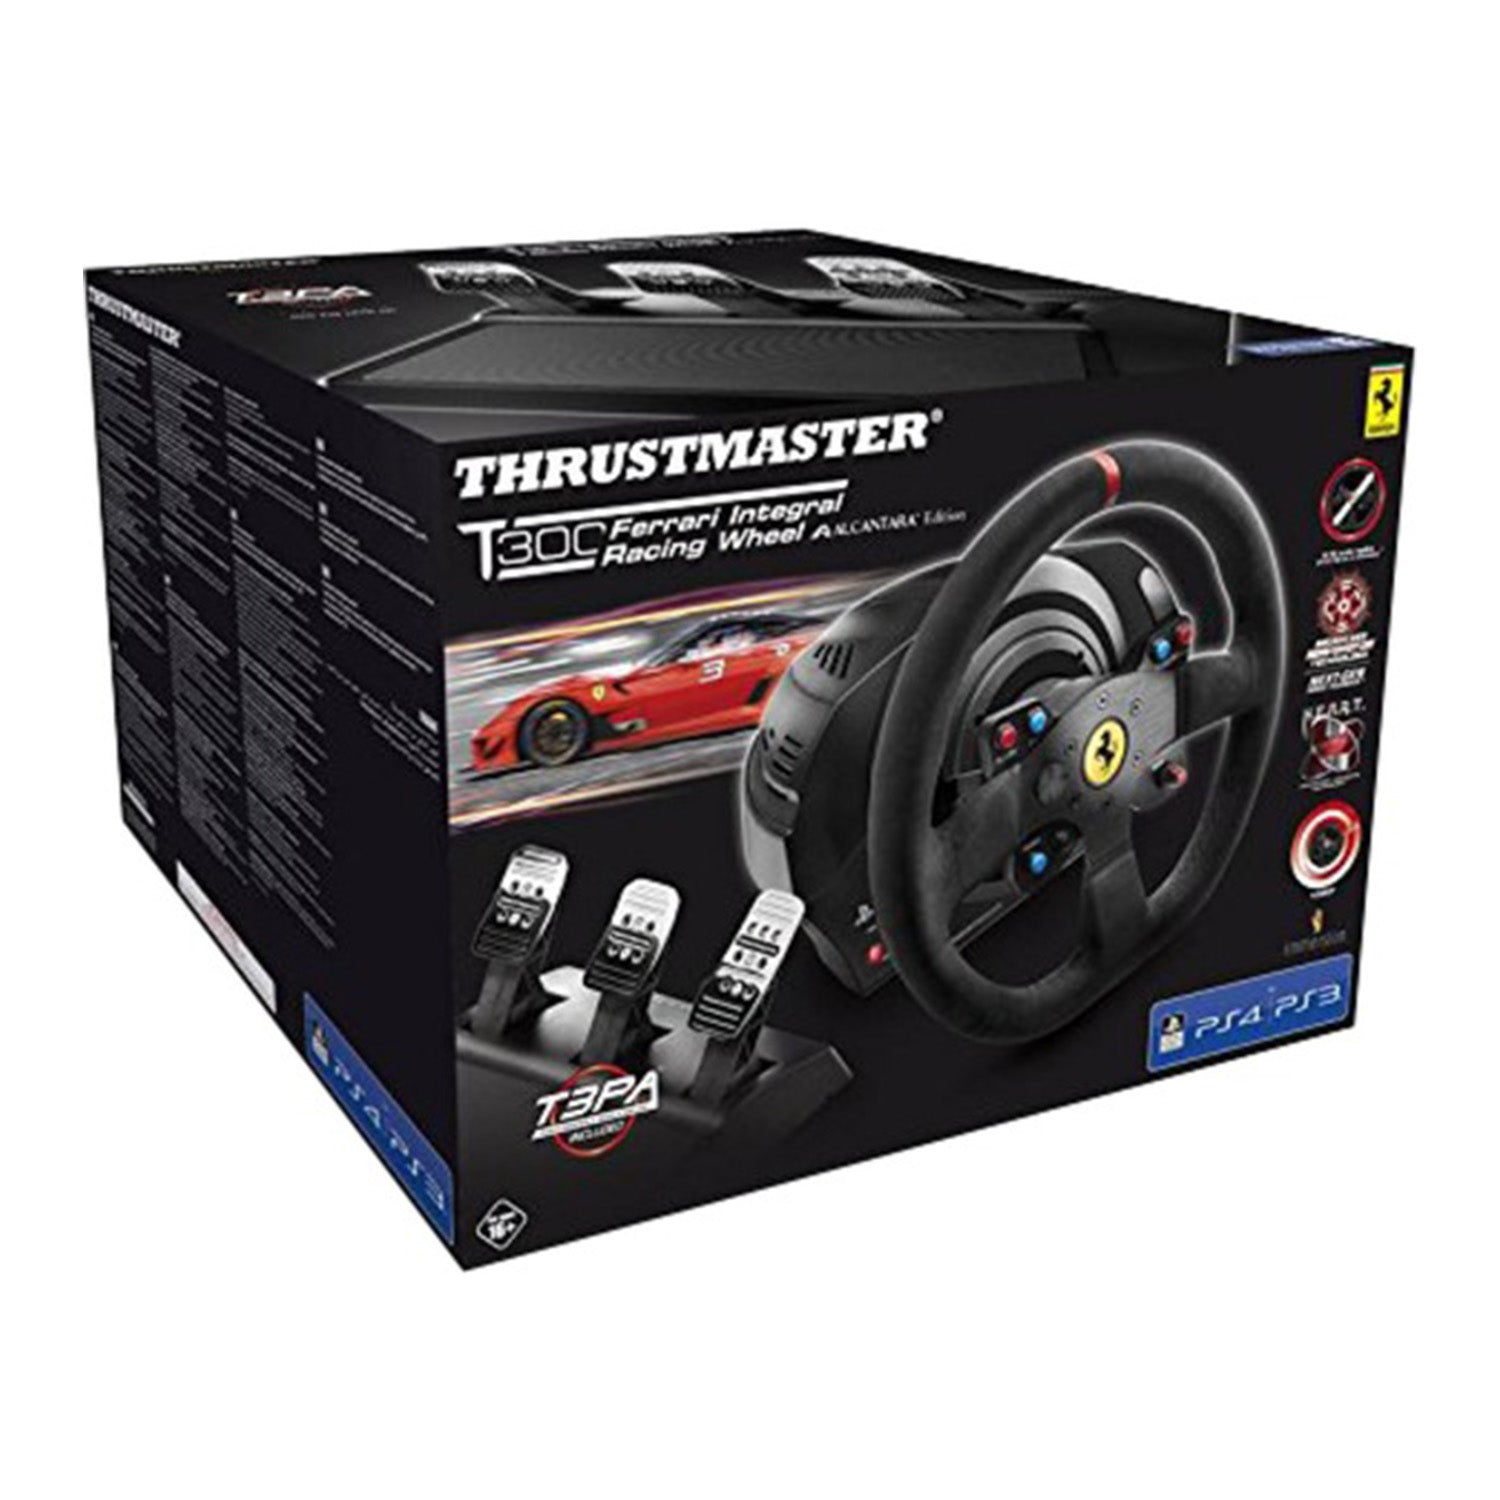 Thrustmaster T300 Ferrari Integral Racing Wheel